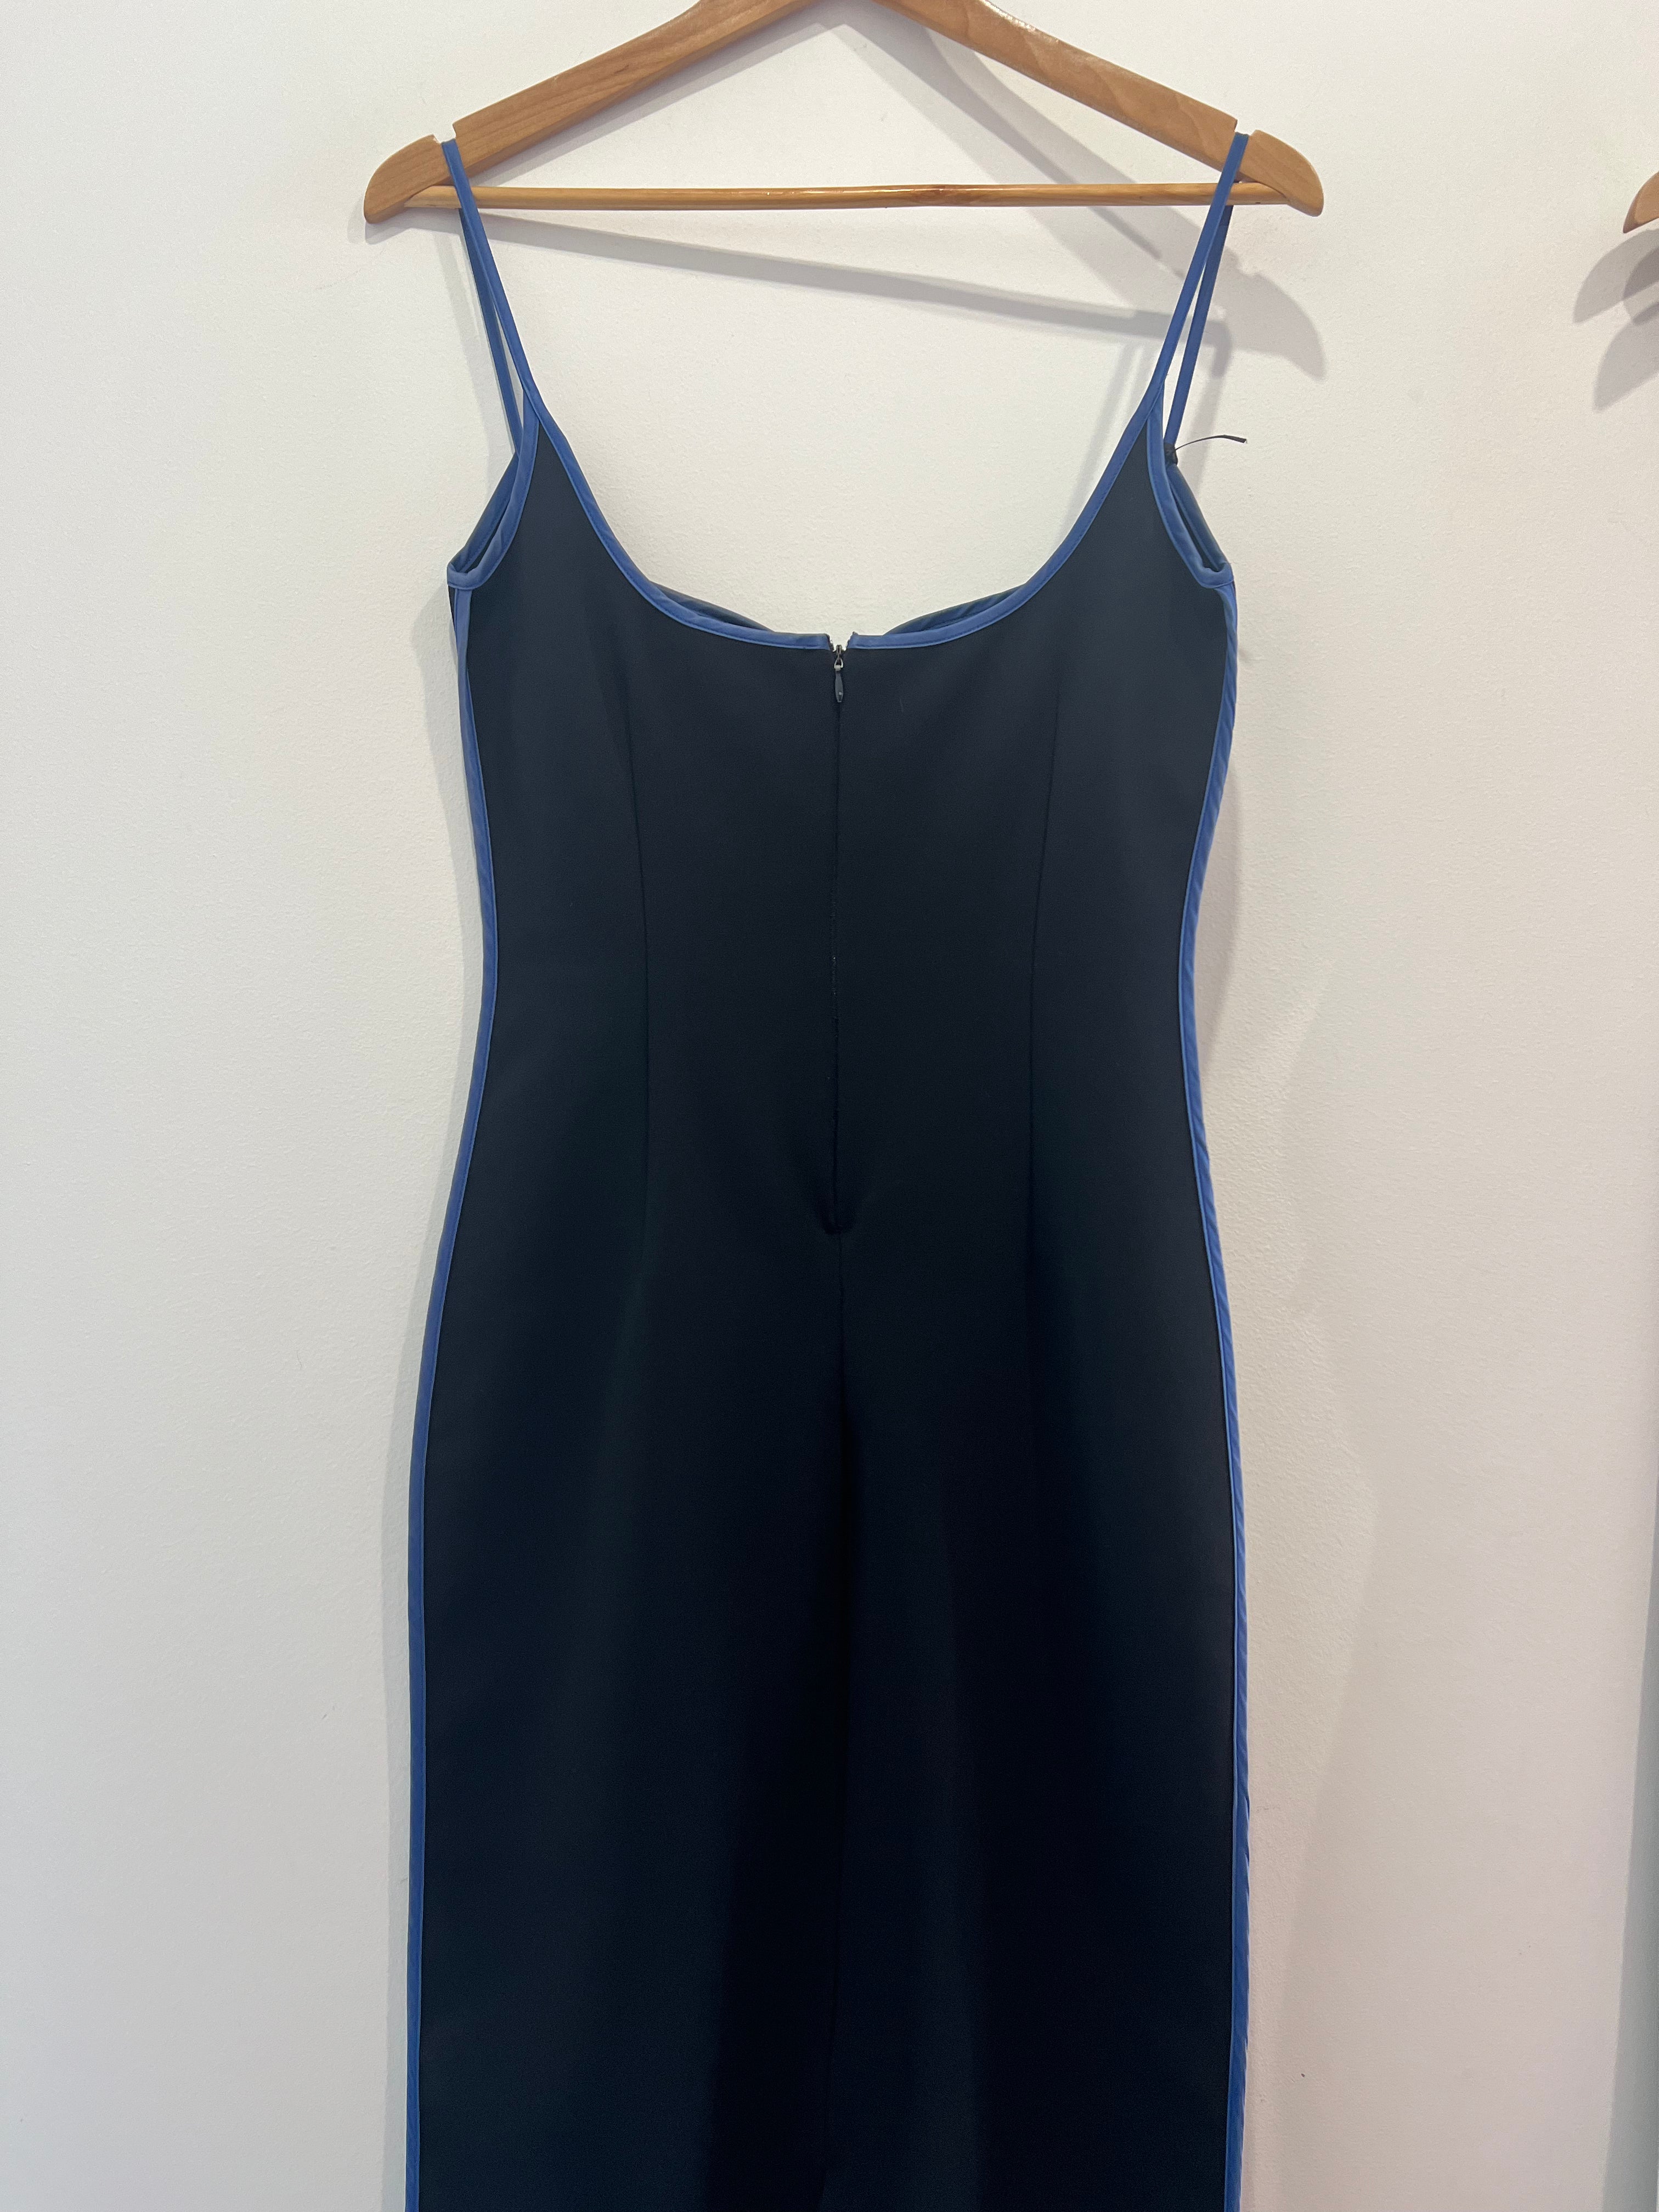 Heart Dress Black/Blue XS - FOR SALE